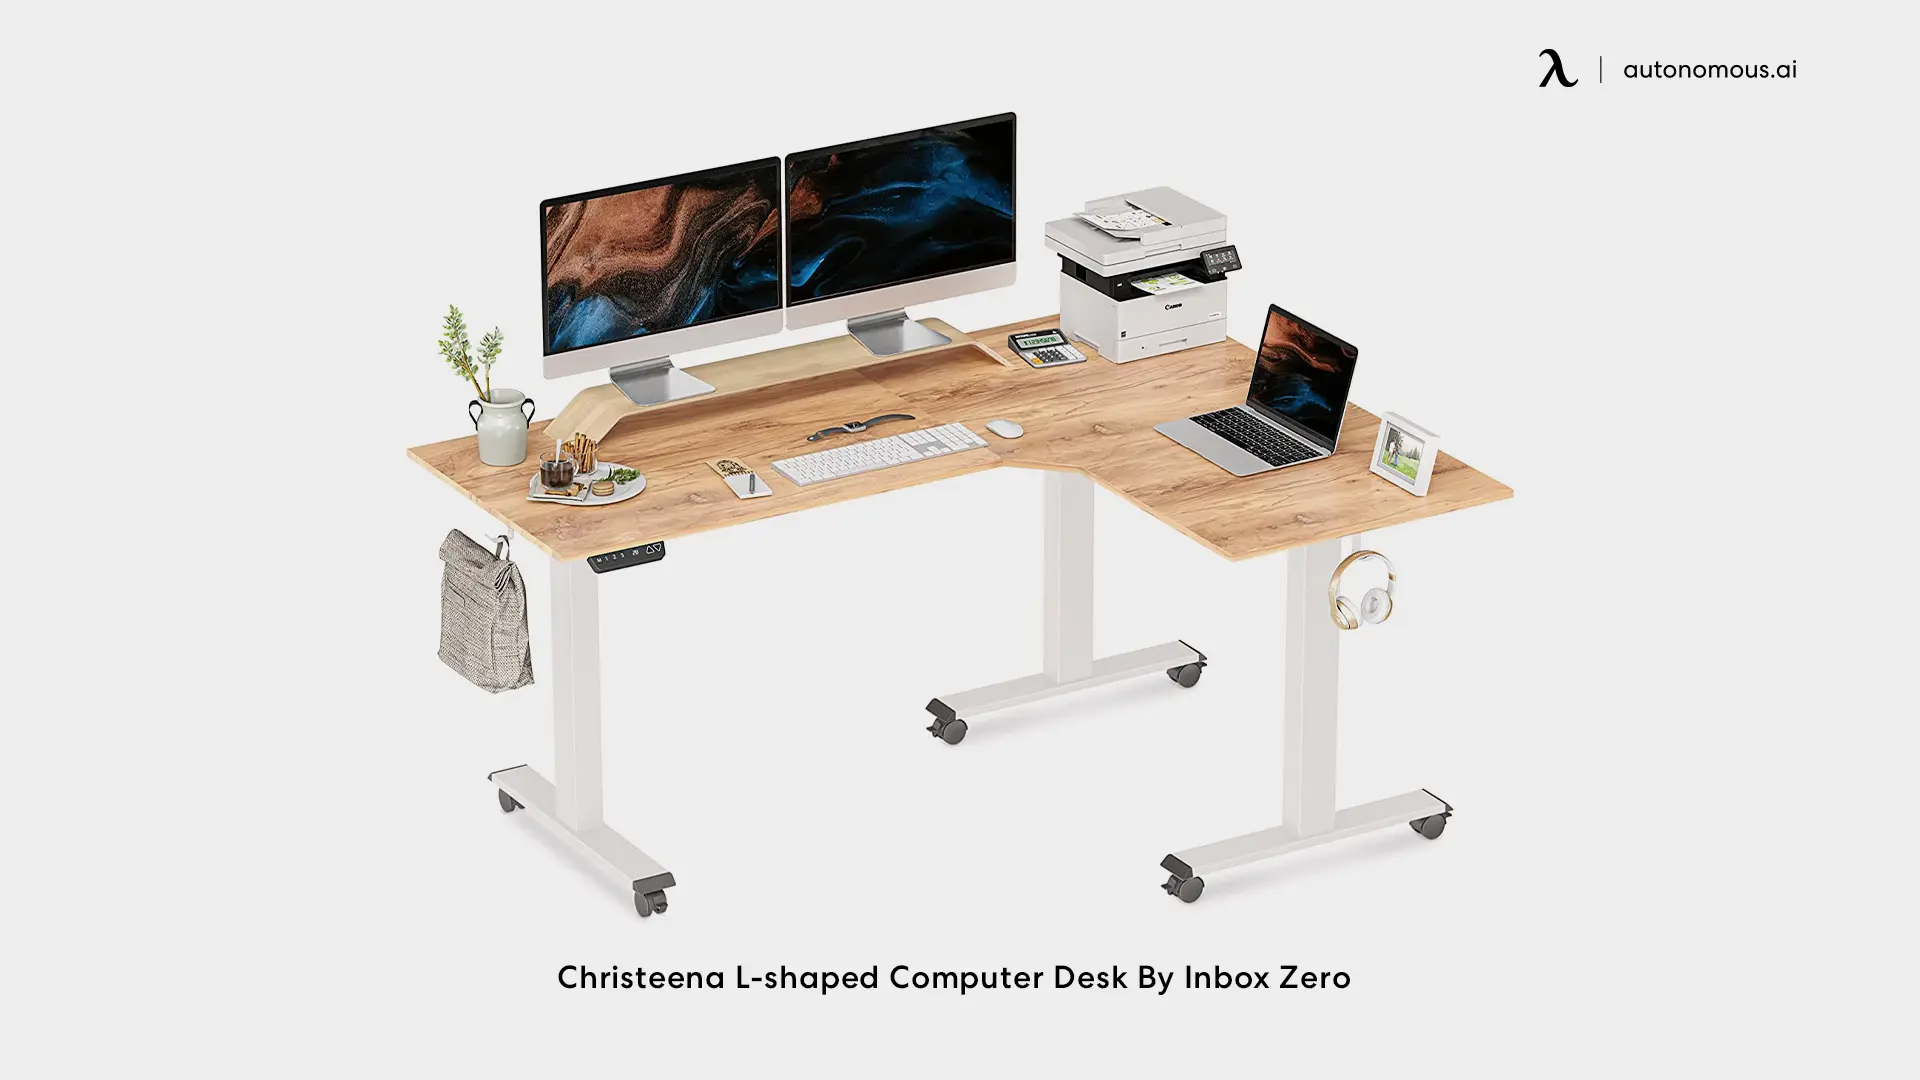 Christeena L-shaped Computer Desk By Inbox Zero